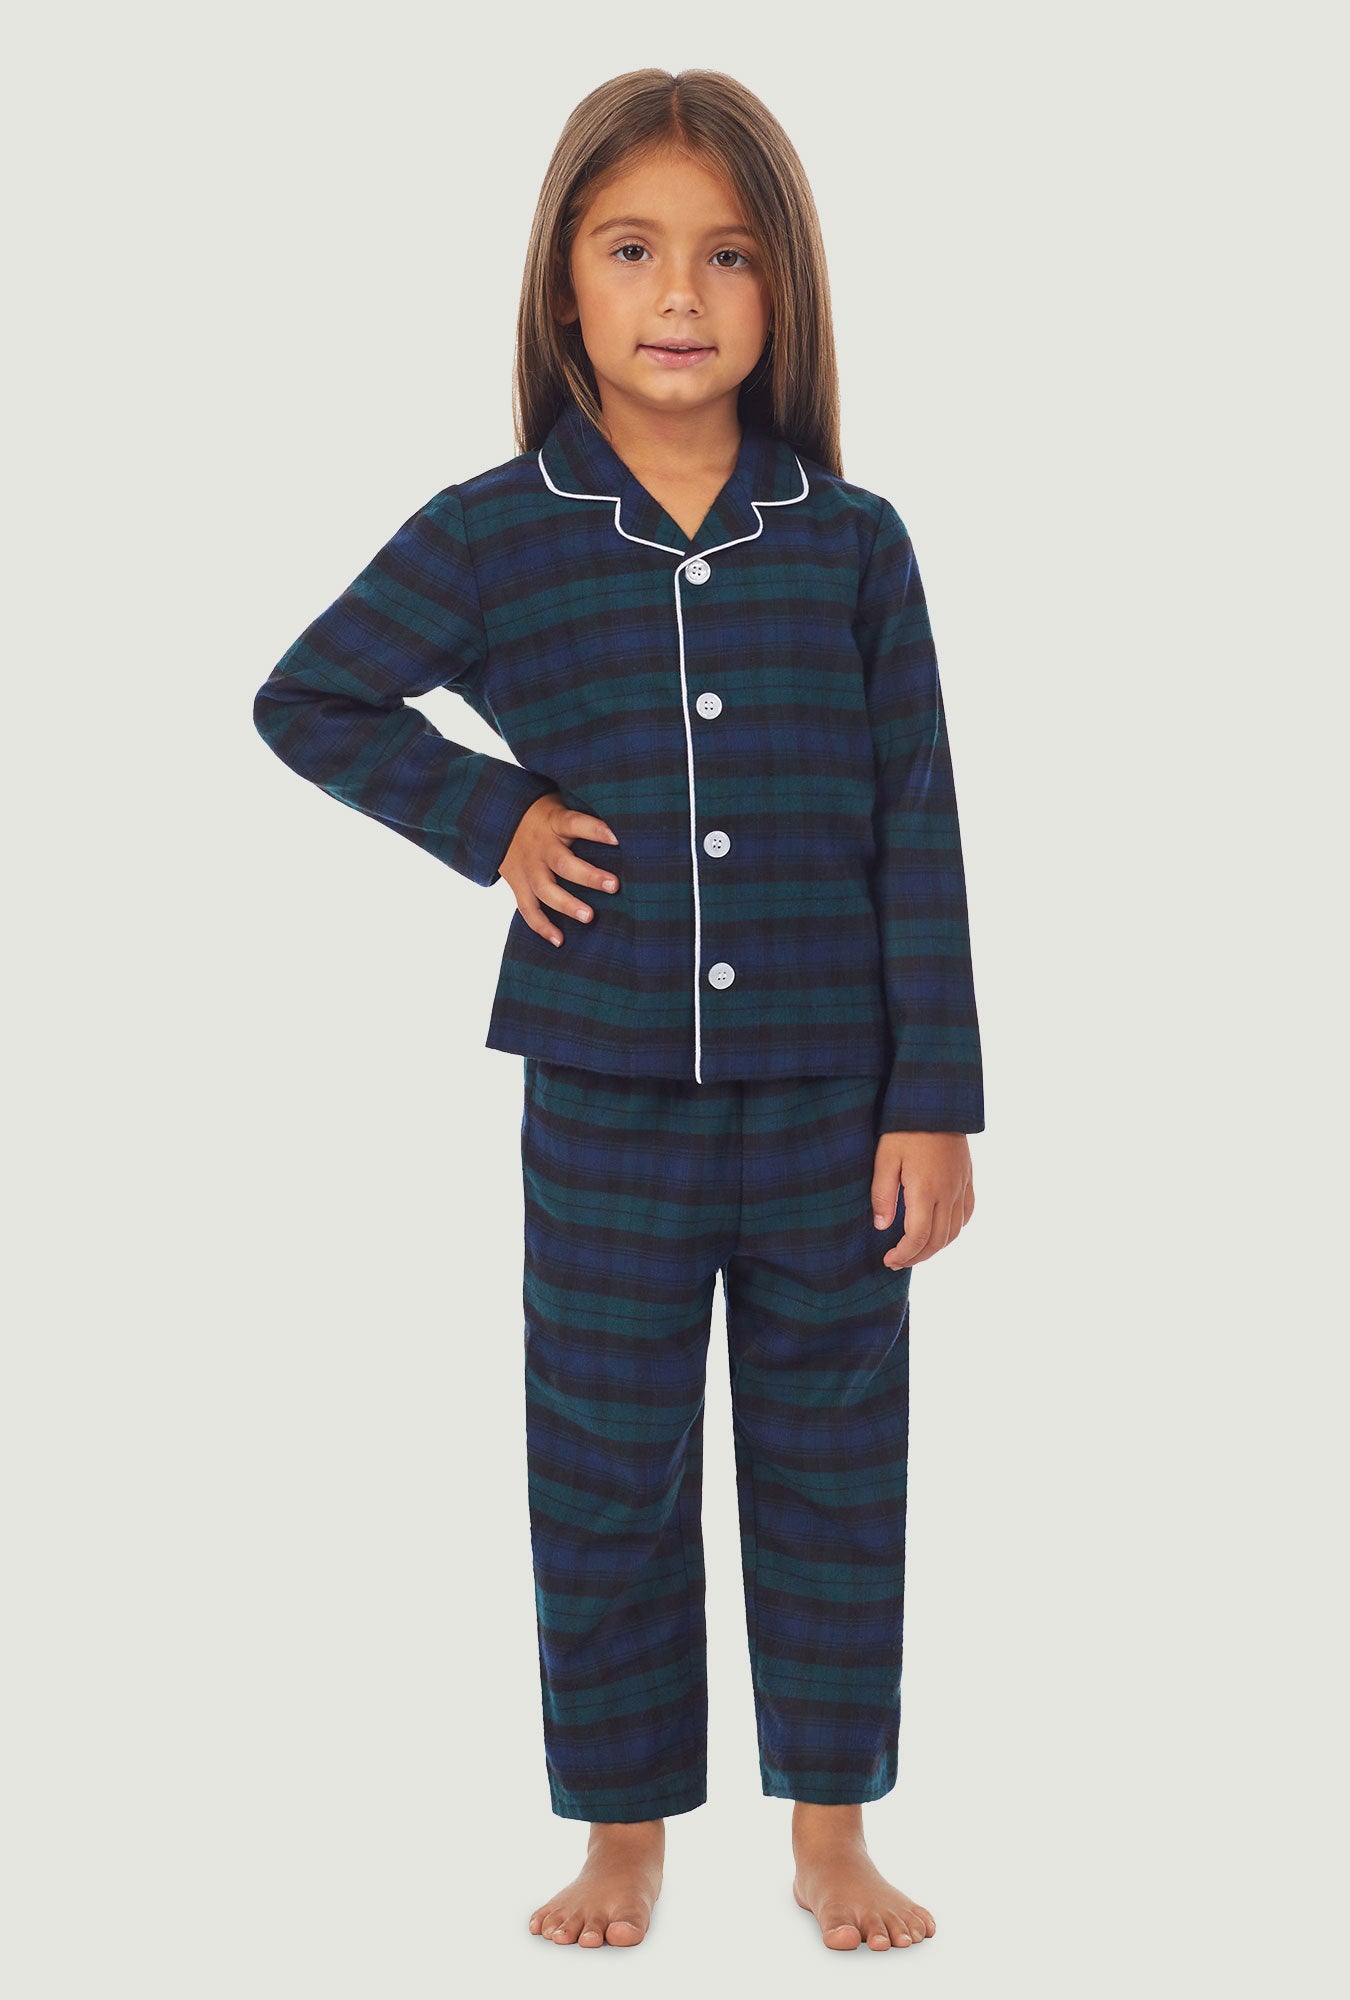 Unisex Toddler & Kids Black Watch Plaid Pajama Set